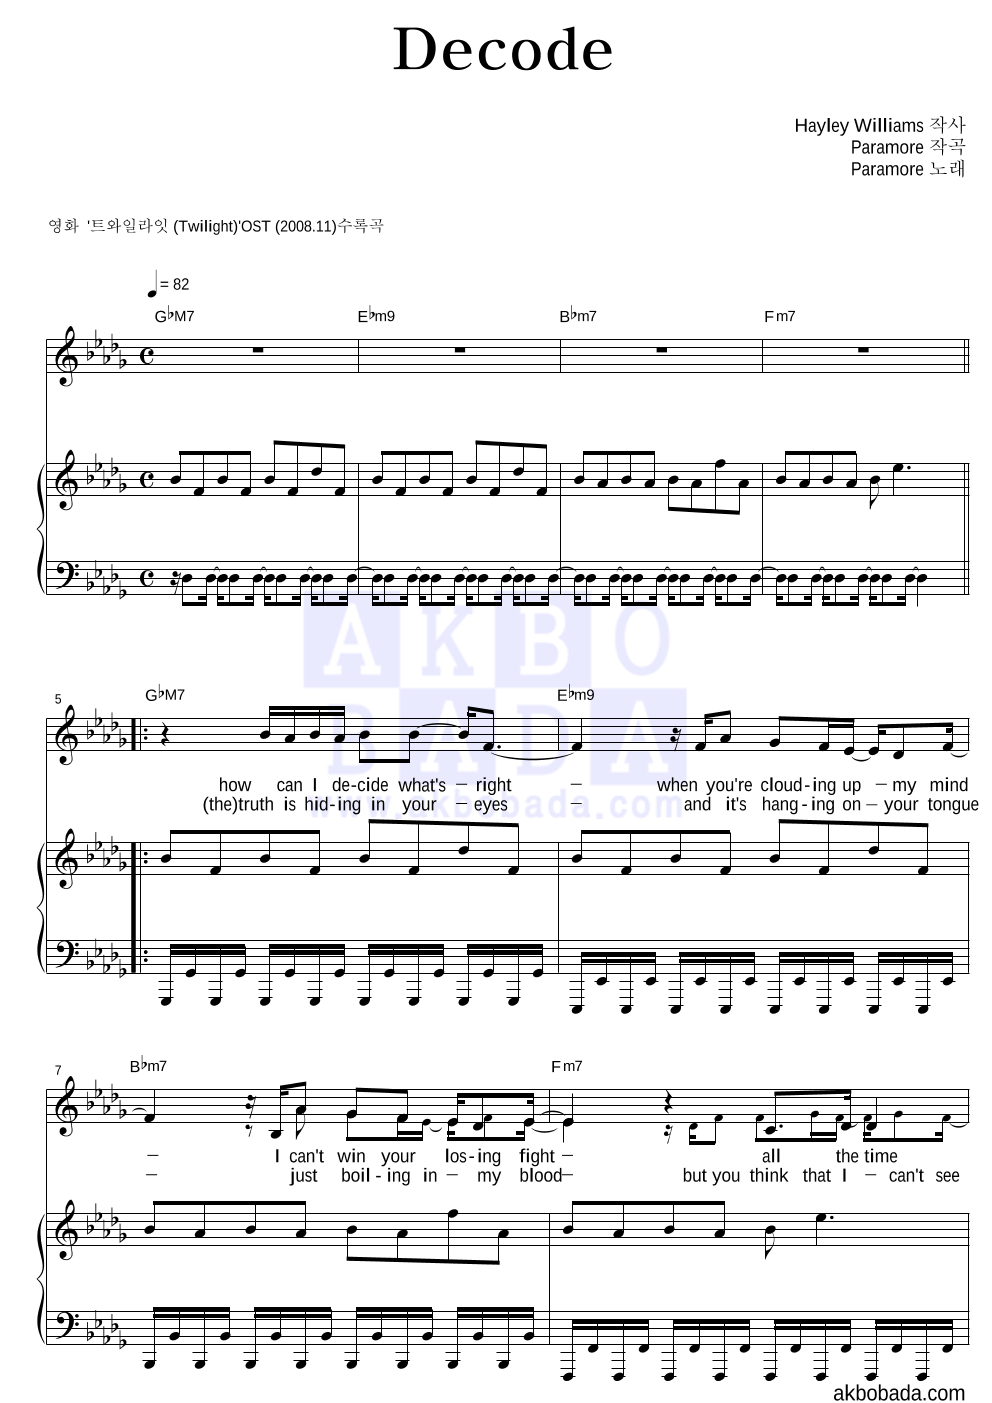 Paramore - Decode 피아노 3단 악보 